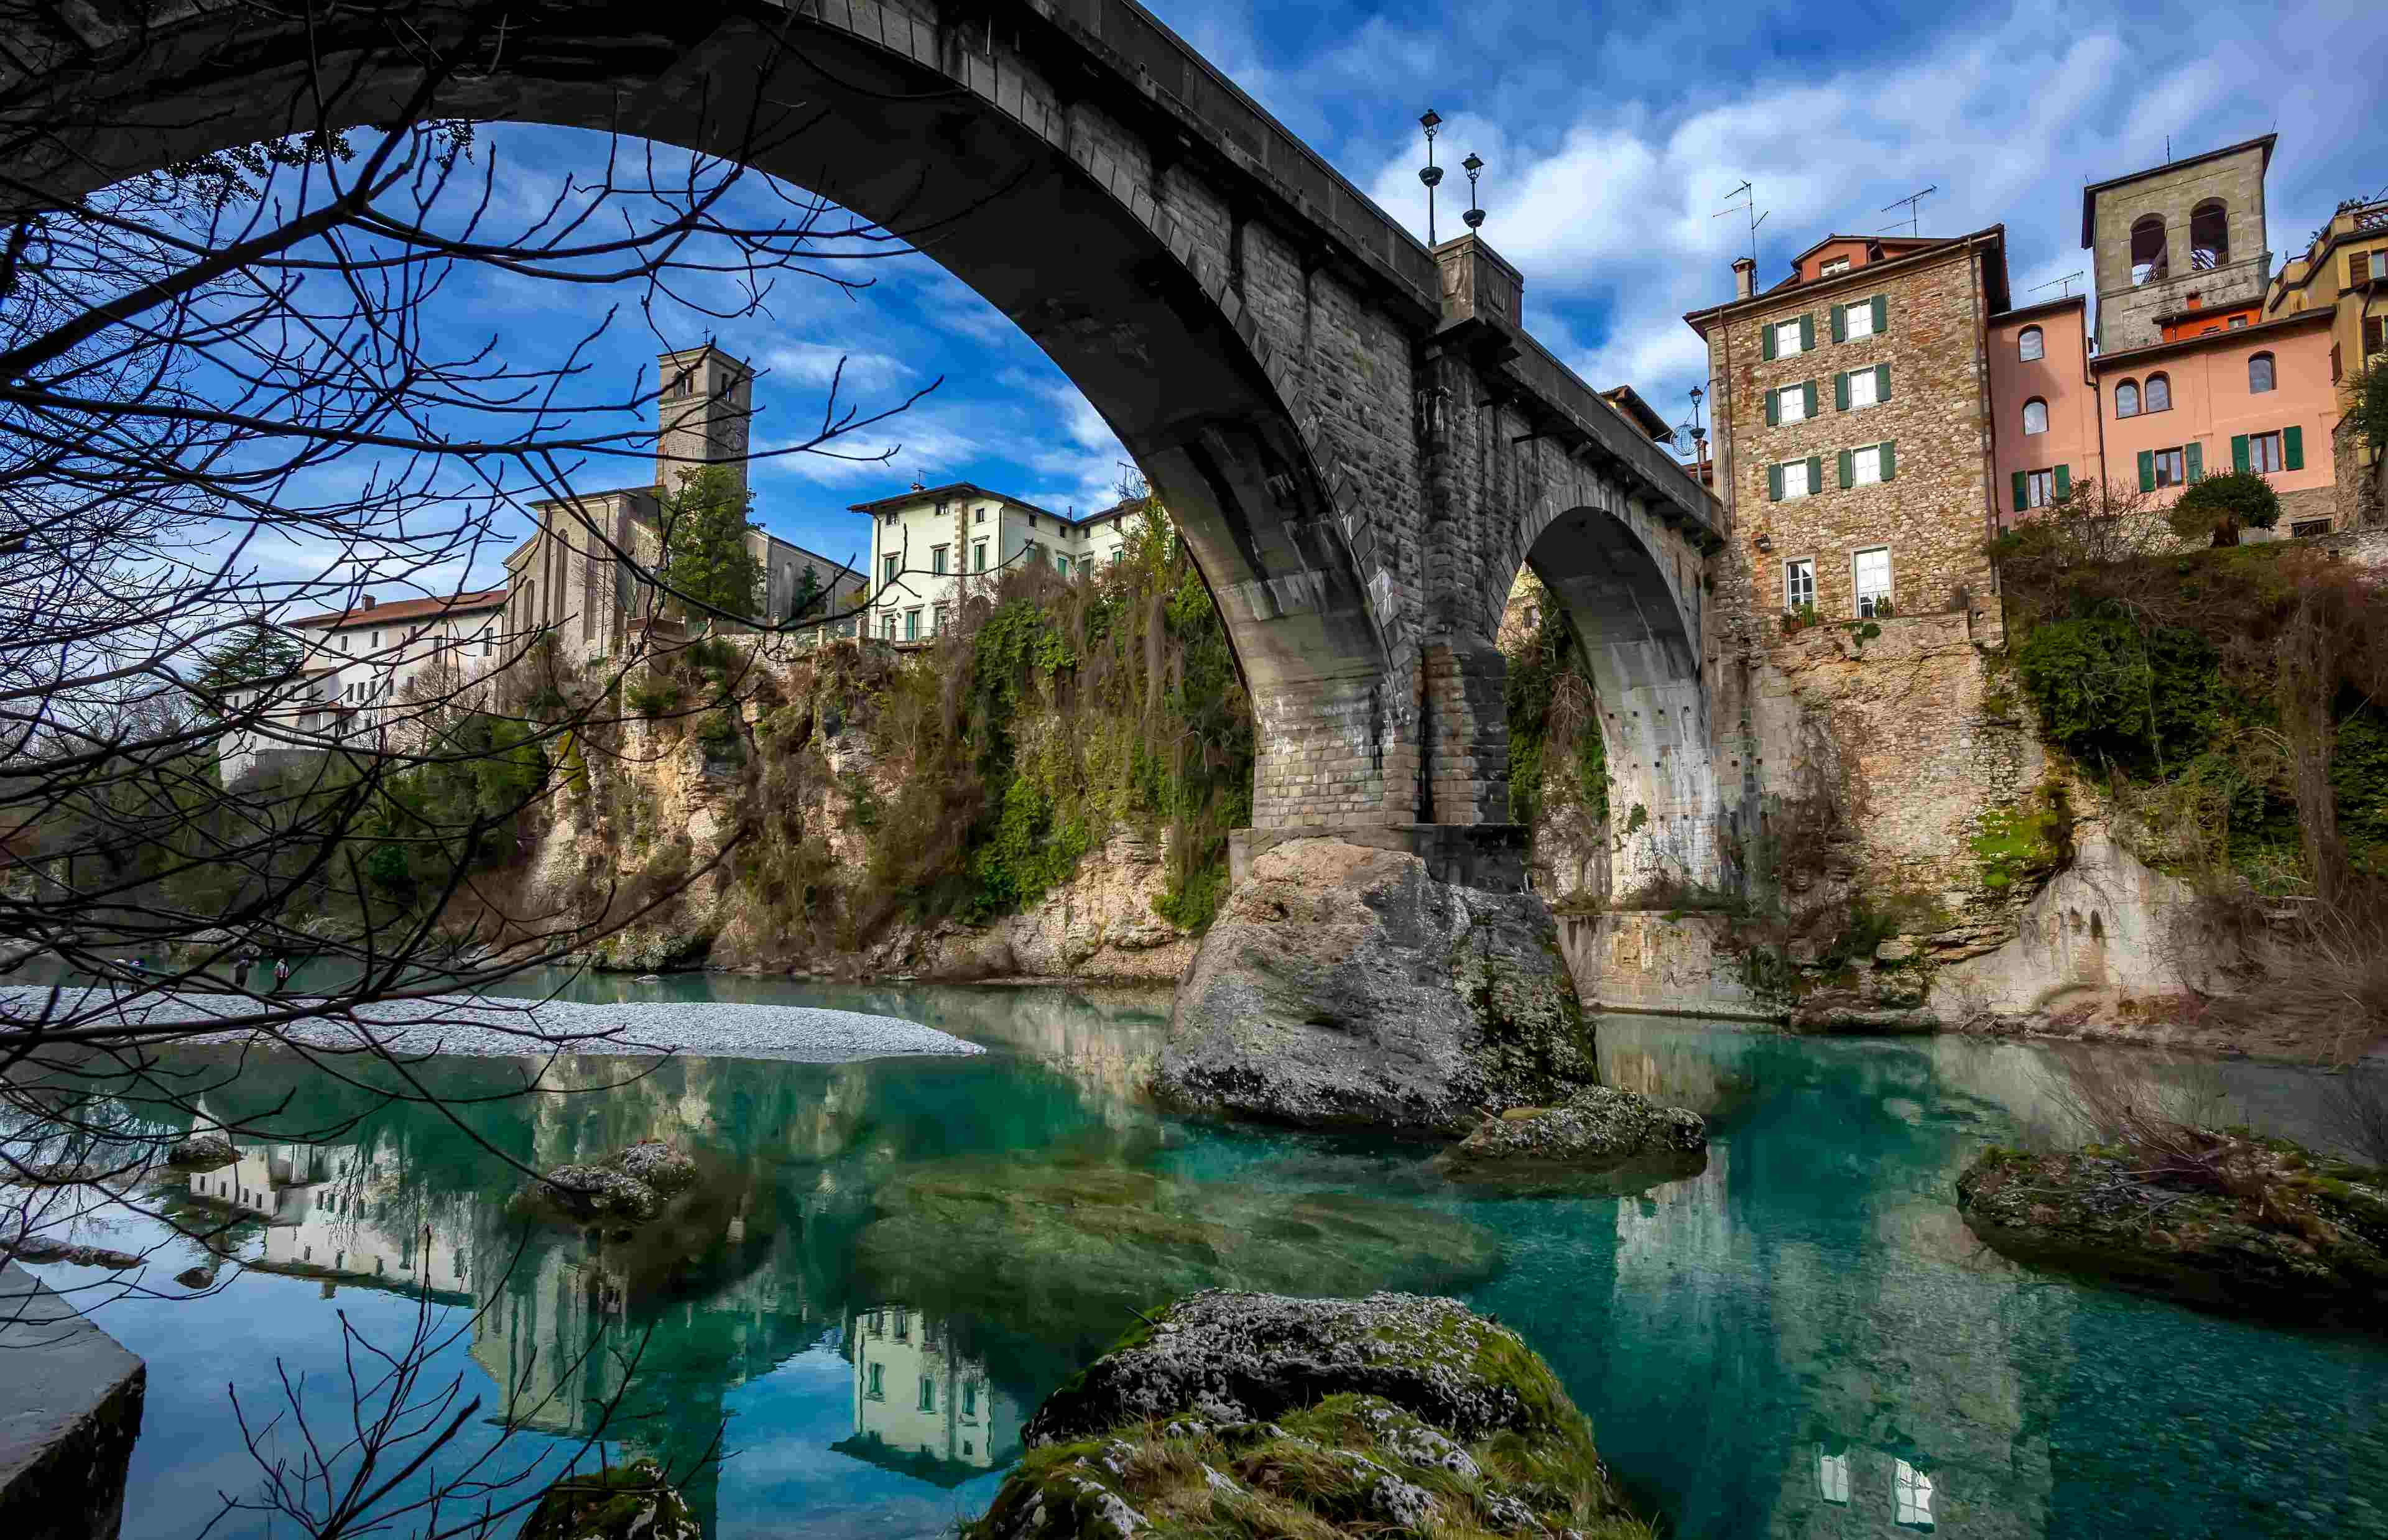 Devil's Bridge, Cividale (Image: Fulcanelli/Shutterstock)